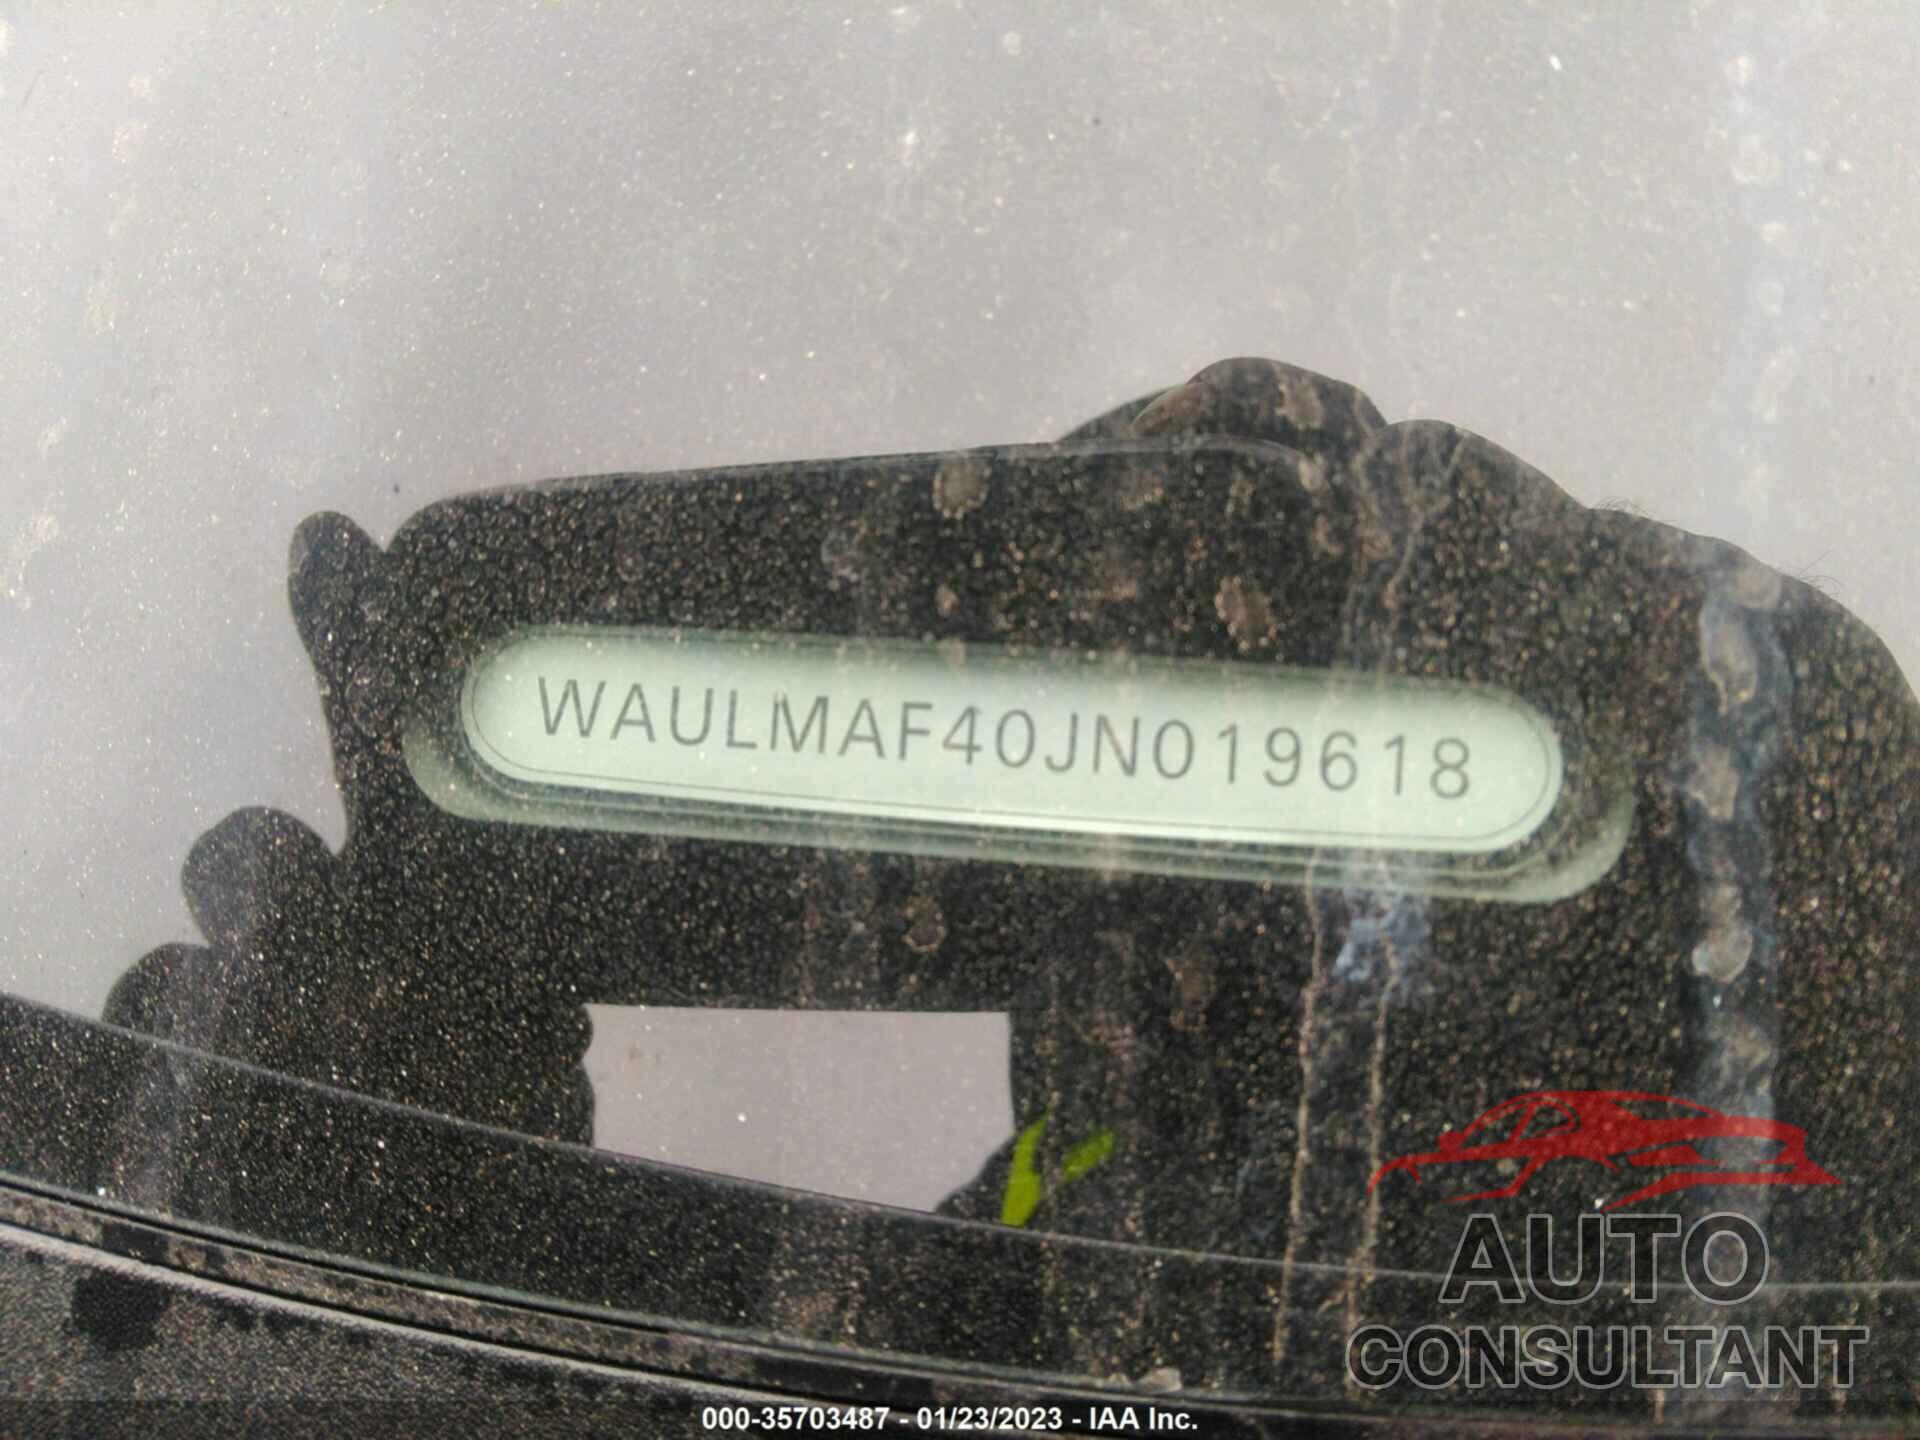 AUDI A4 2018 - WAULMAF40JN019618